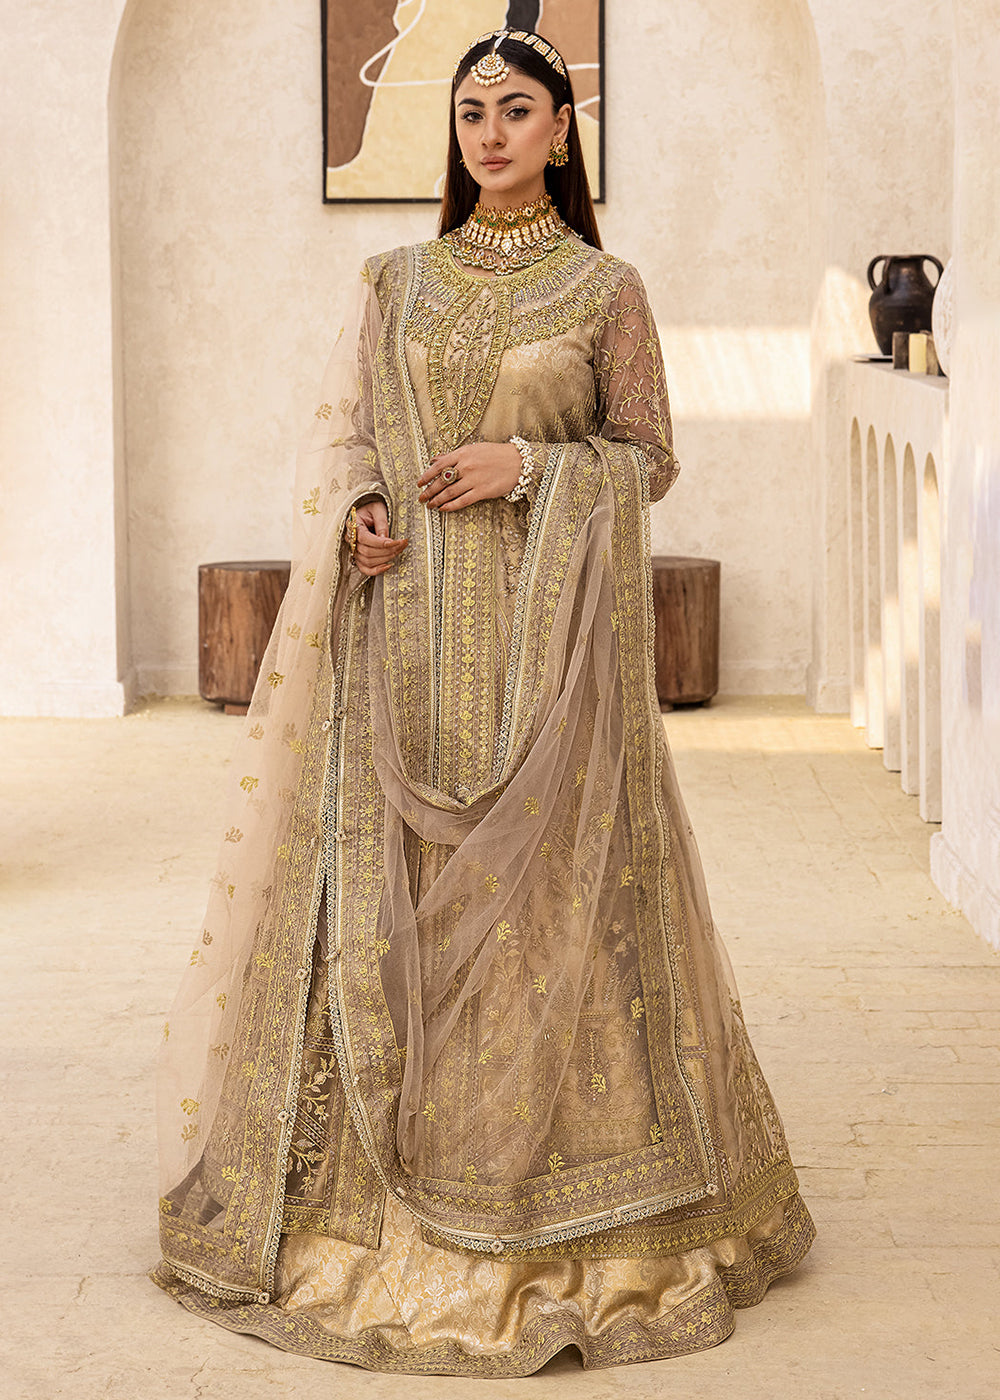 WEDDING ETHNIC BRIDAL INDIAN PAKISTANI FORMAL WEAR SAREE BOLLYWOOD LEHENGA  CHOLI | eBay